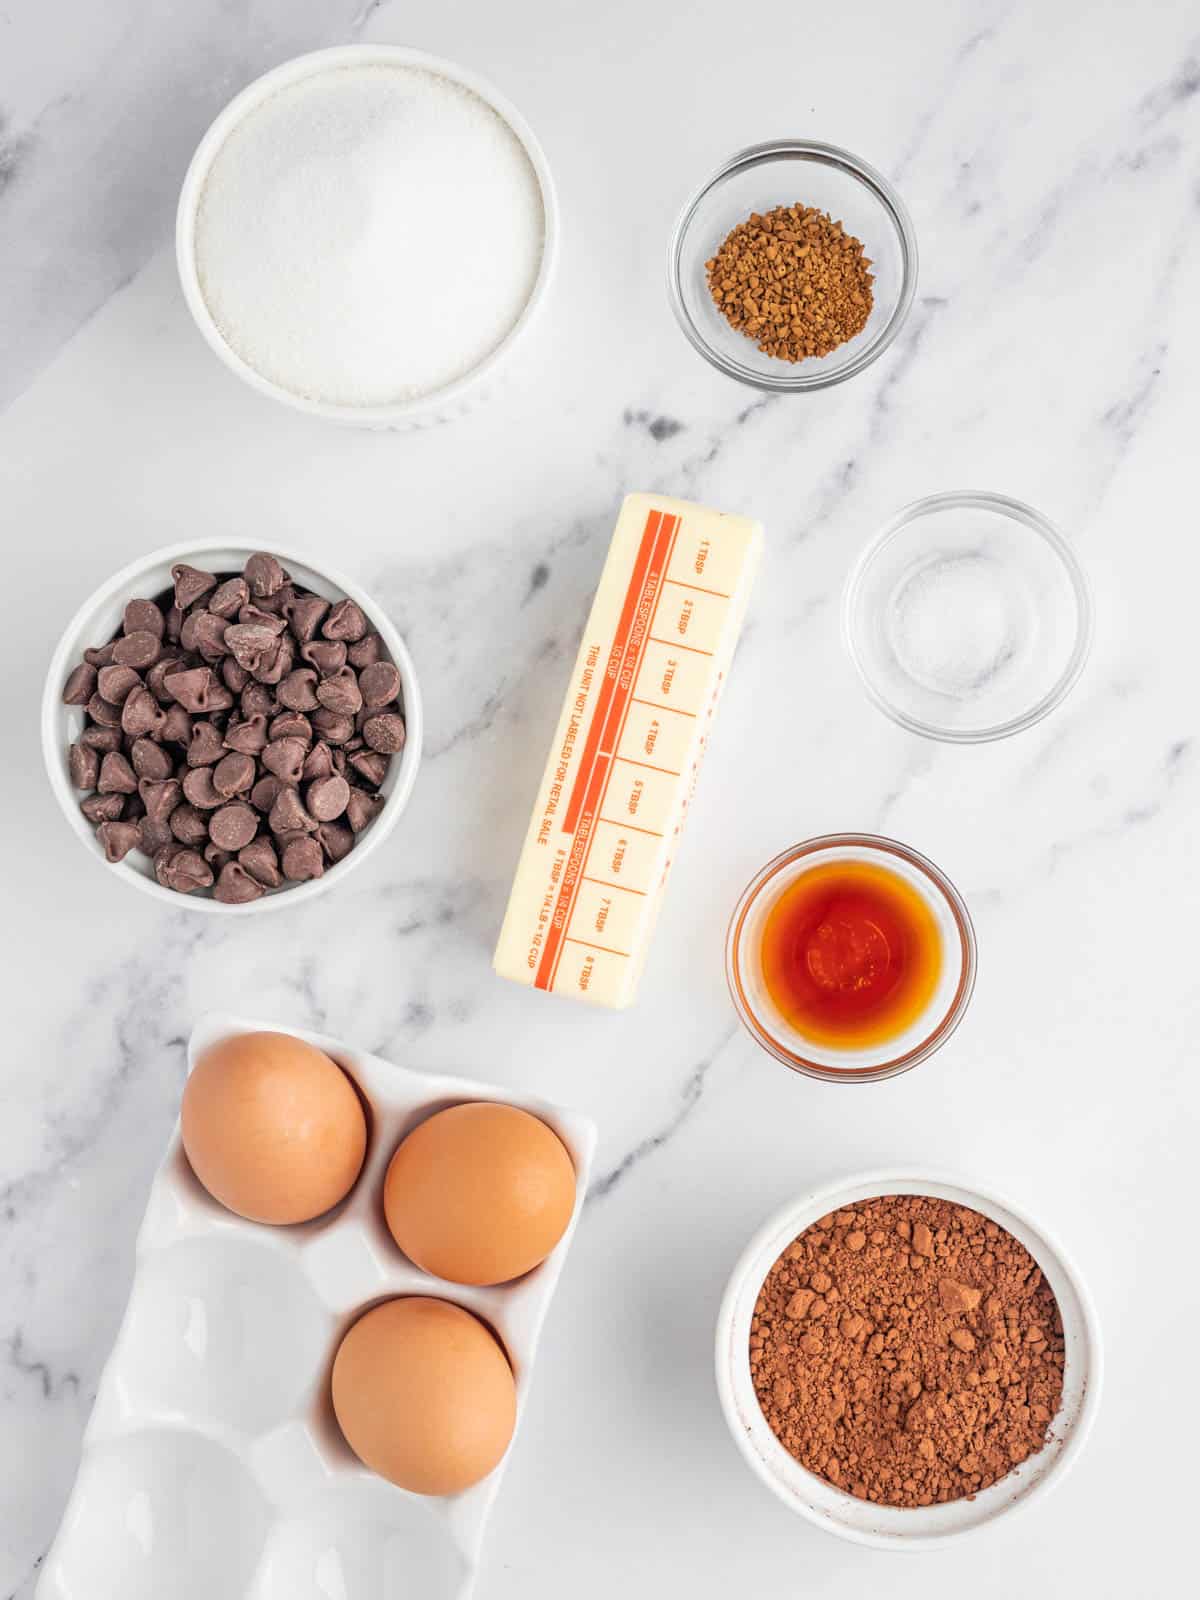 Ingredients needed for flourless chocolate torte.